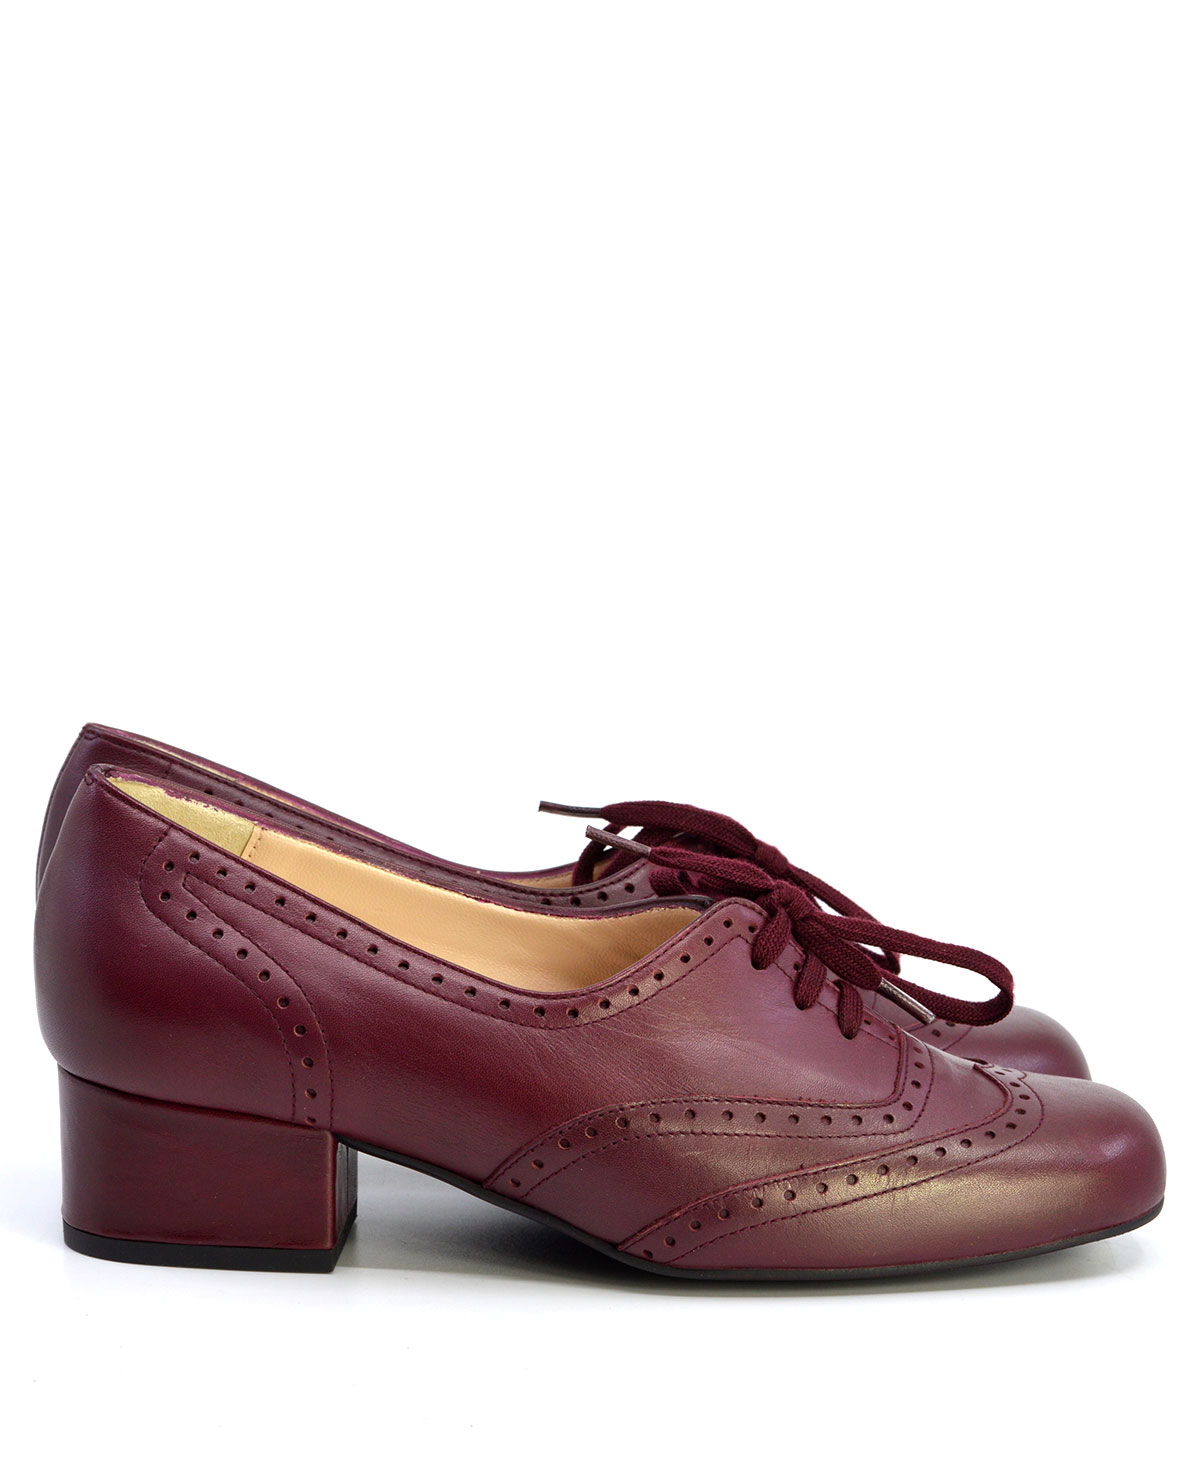 SHERRIF SHOES Women's Maroon Stiletto Heel Sandals - Sherrif Shoes - 3109522